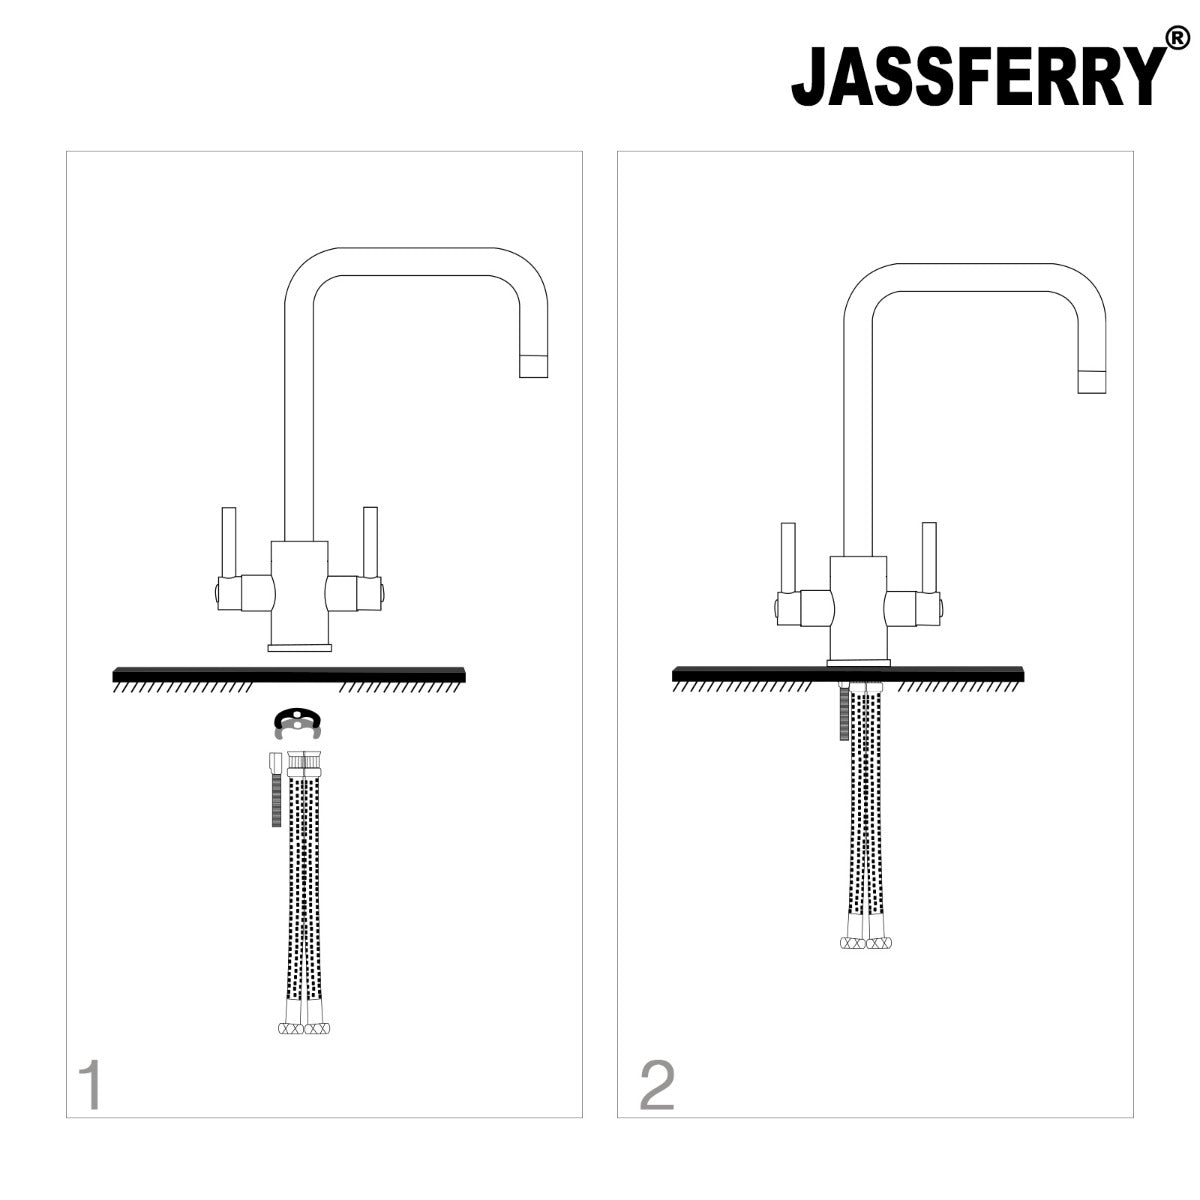 JassferryJASSFERRY Modern Kitchen Sink Mixer Tap Two Handle Swivel Spout ChromeKitchen taps